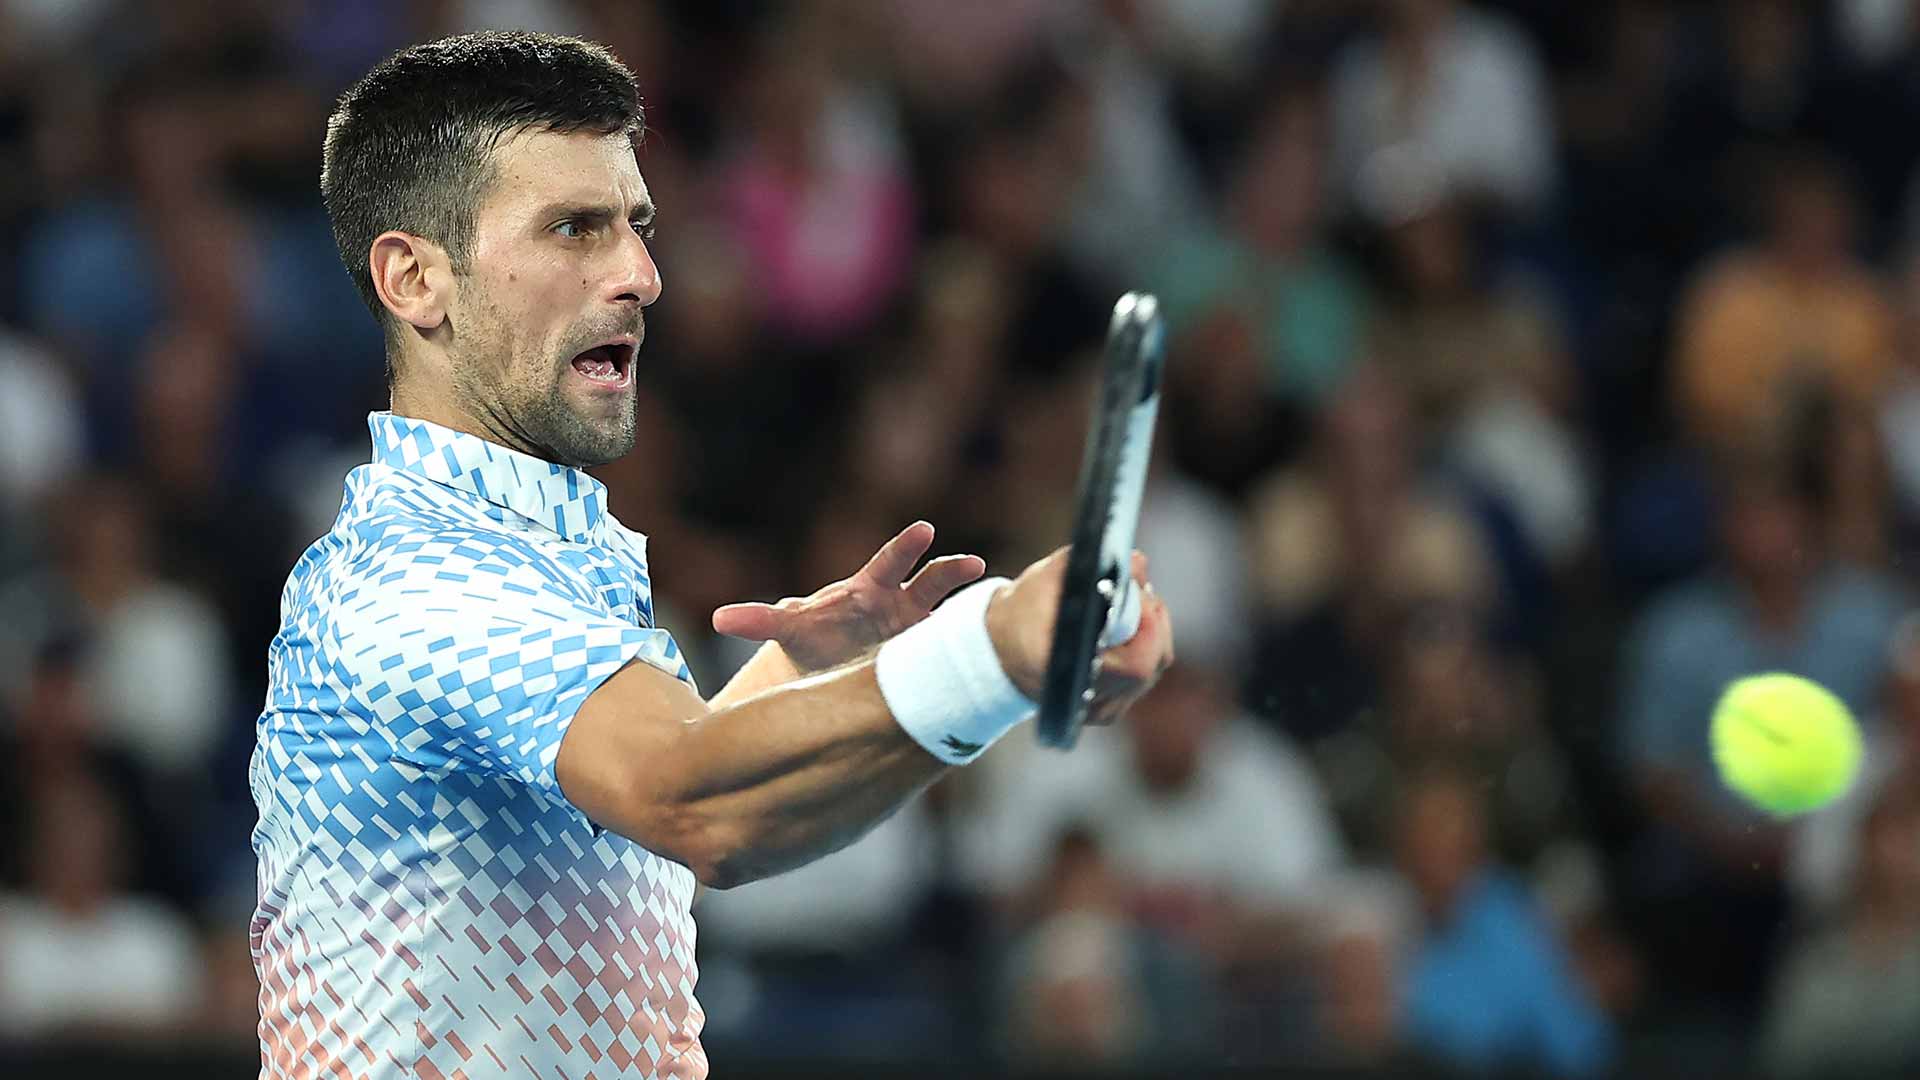 Novak Djokovic will face a qualifier in the Dubai opening round.